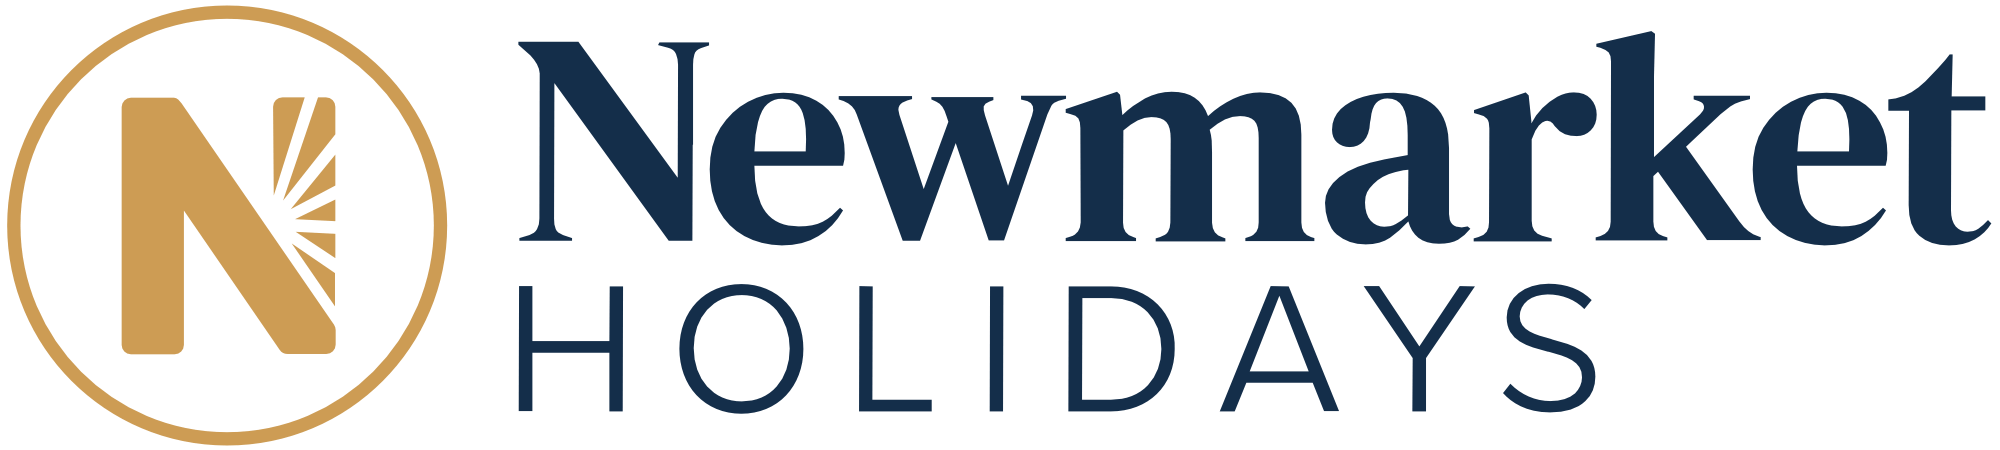 Newmarket Holidays Logo